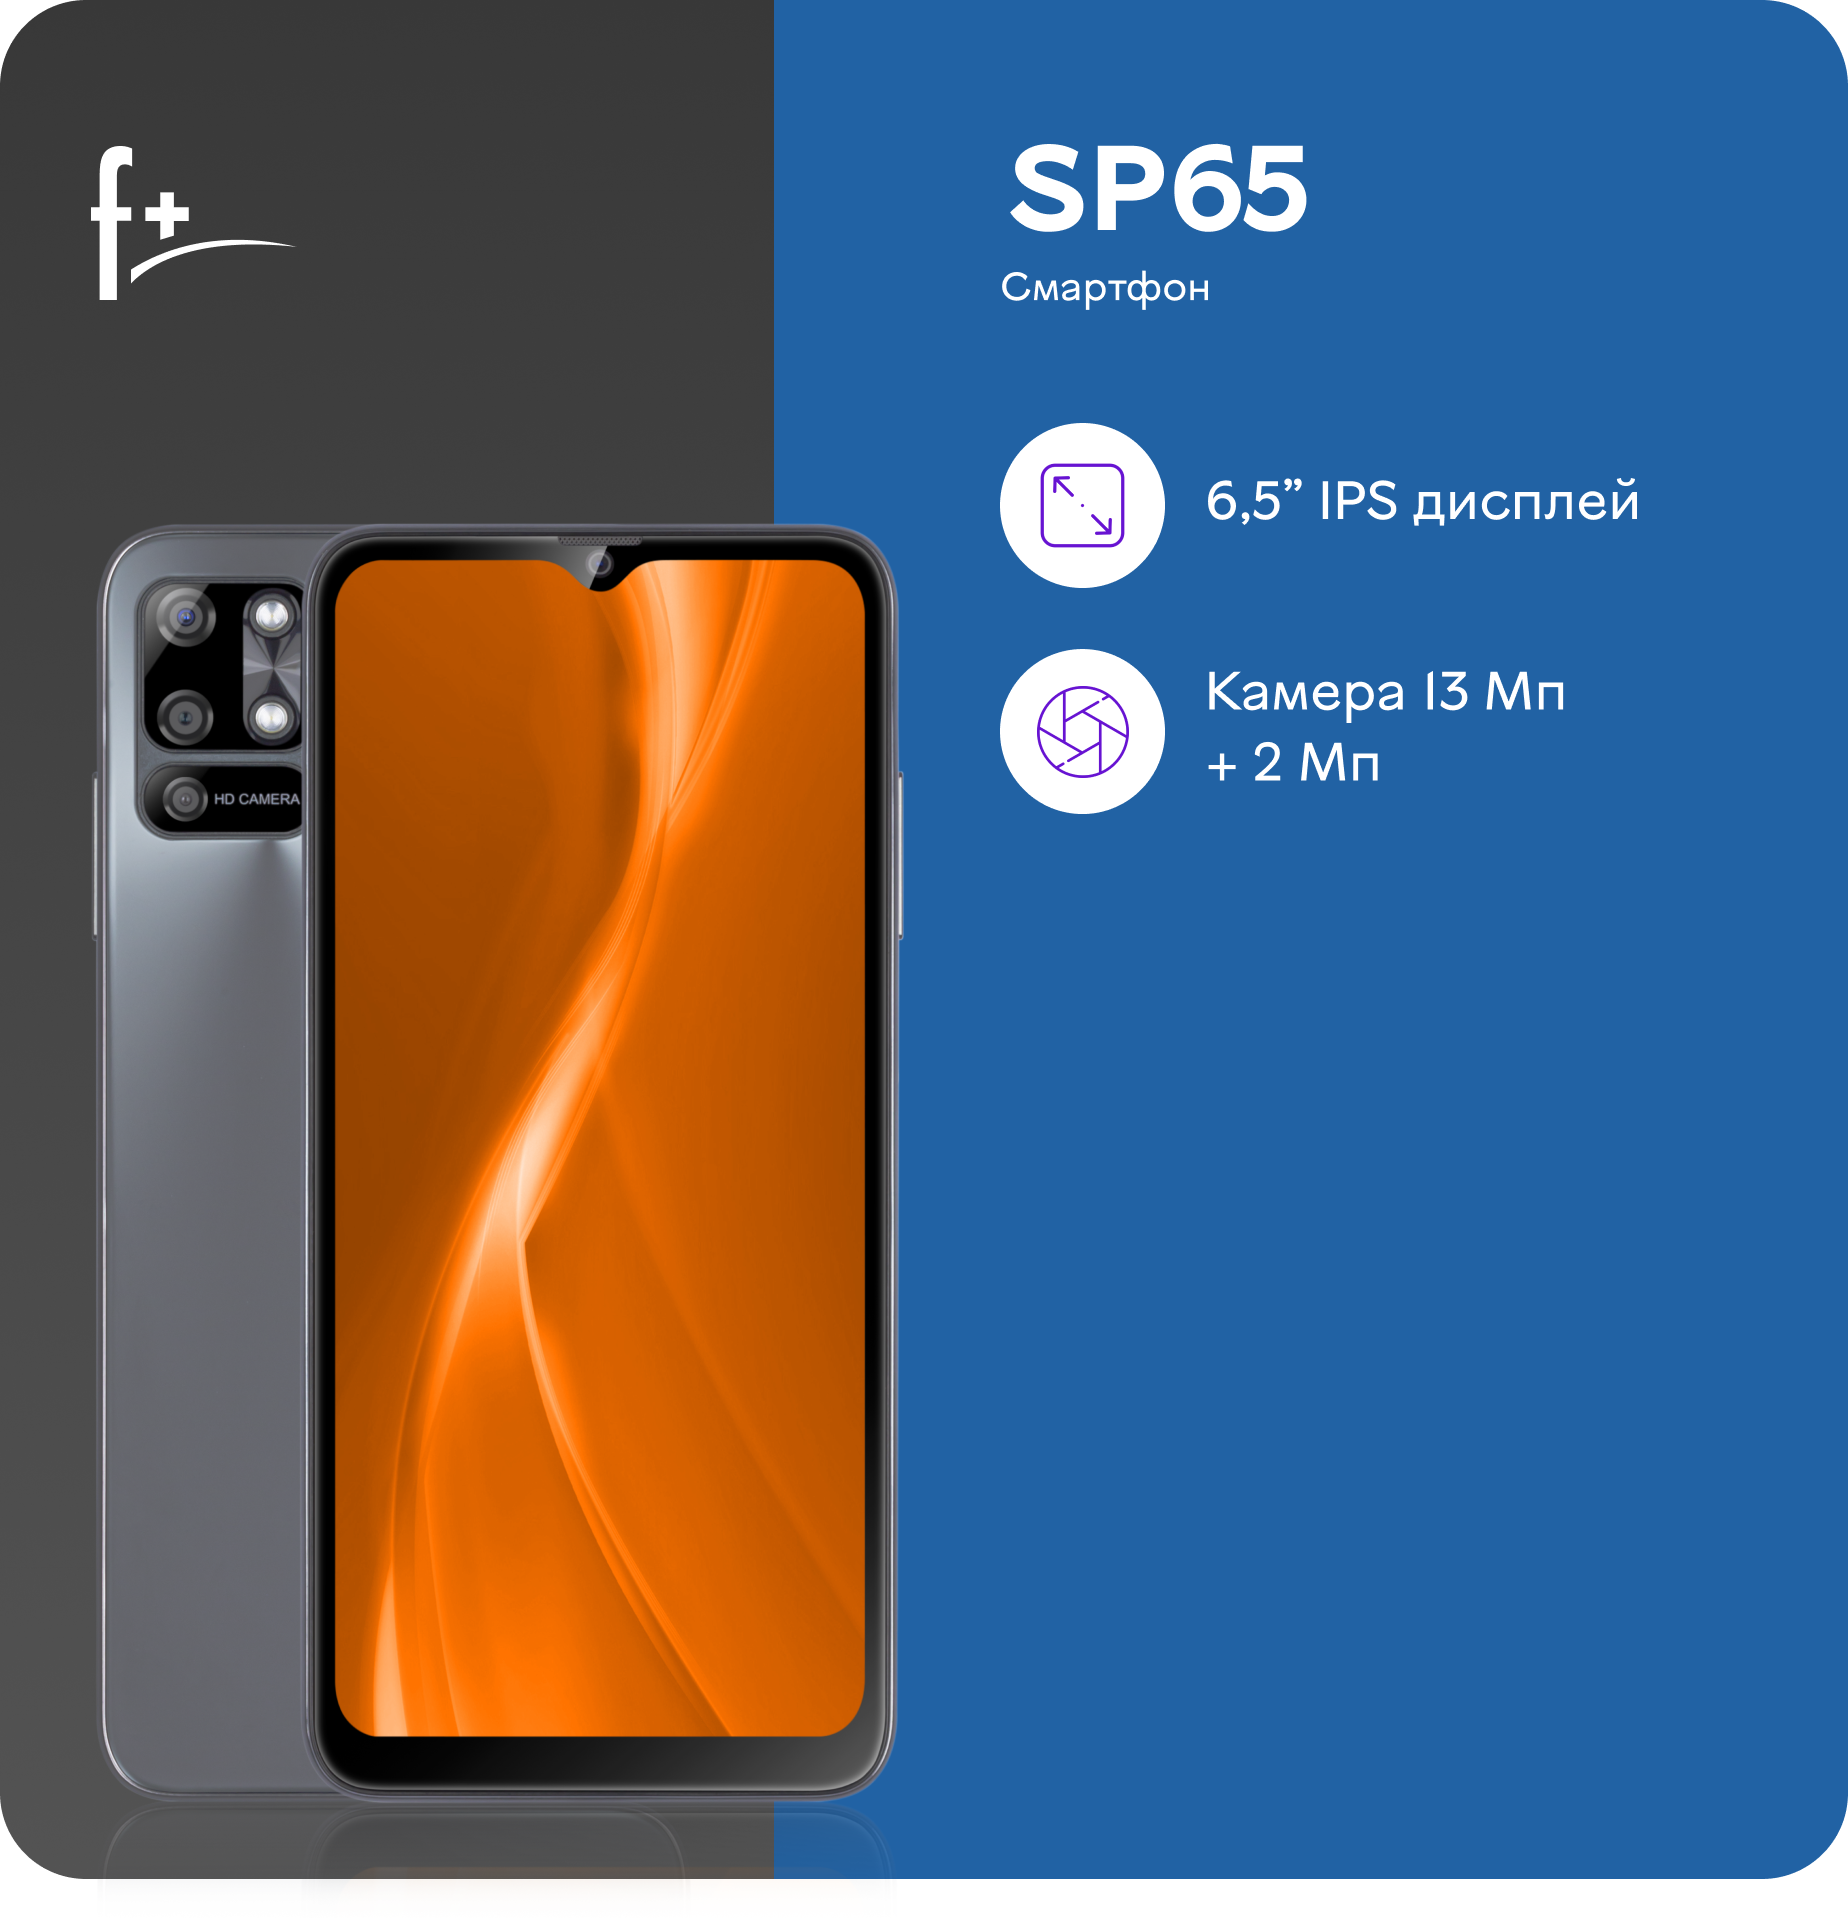 Смартфон F+ SP65 6/64 ГБ, 2 nano SIM, темно-серый